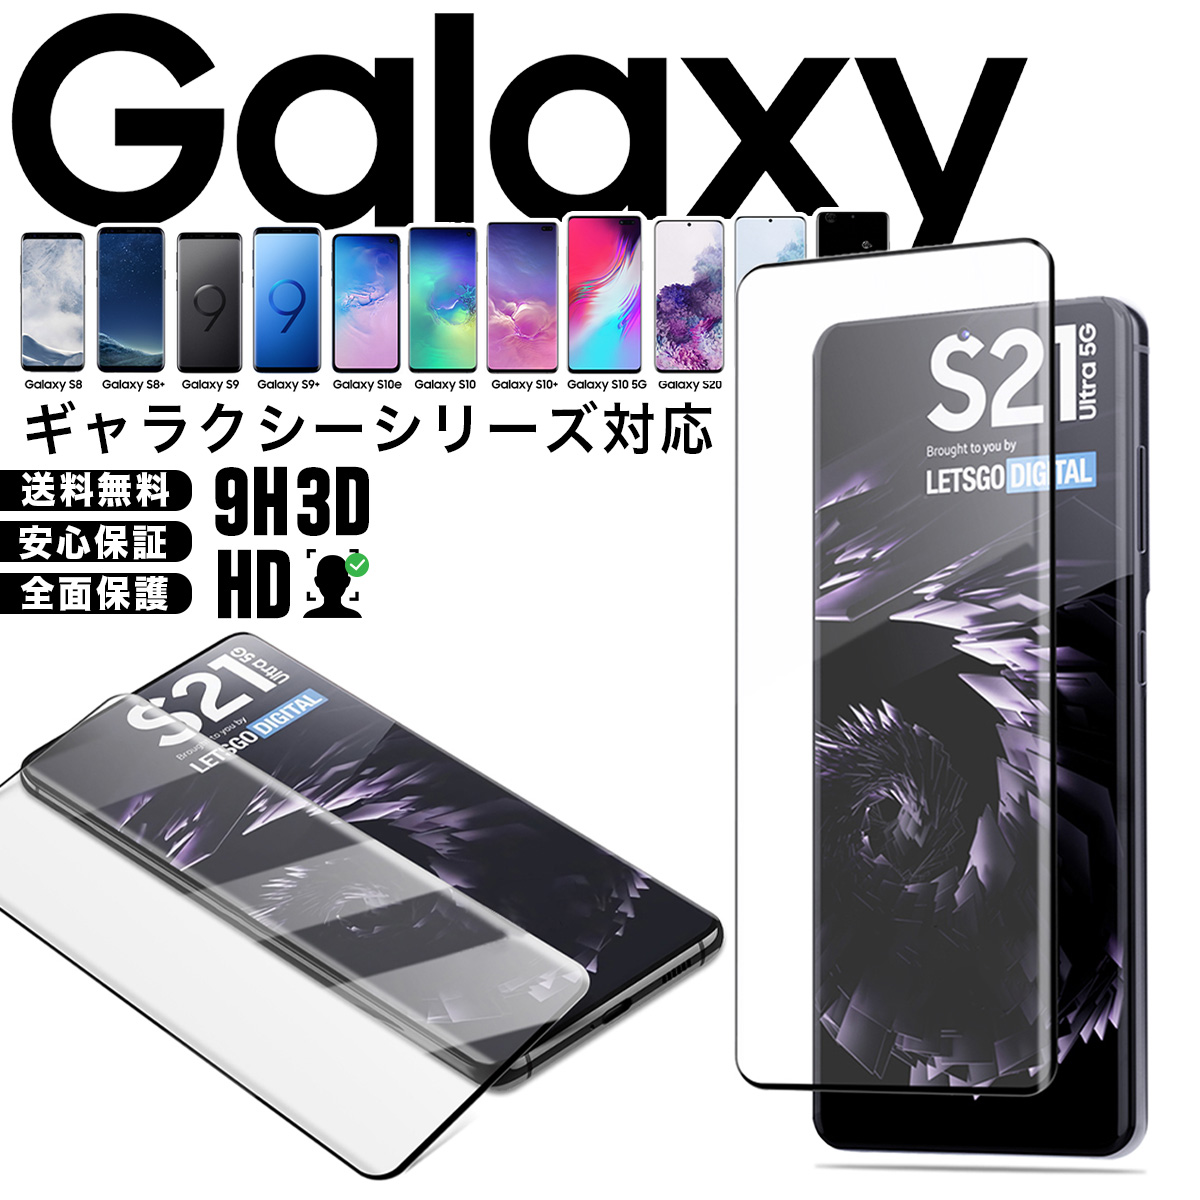 Galaxy シリーズ対応 特殊コーティング強化ガラス